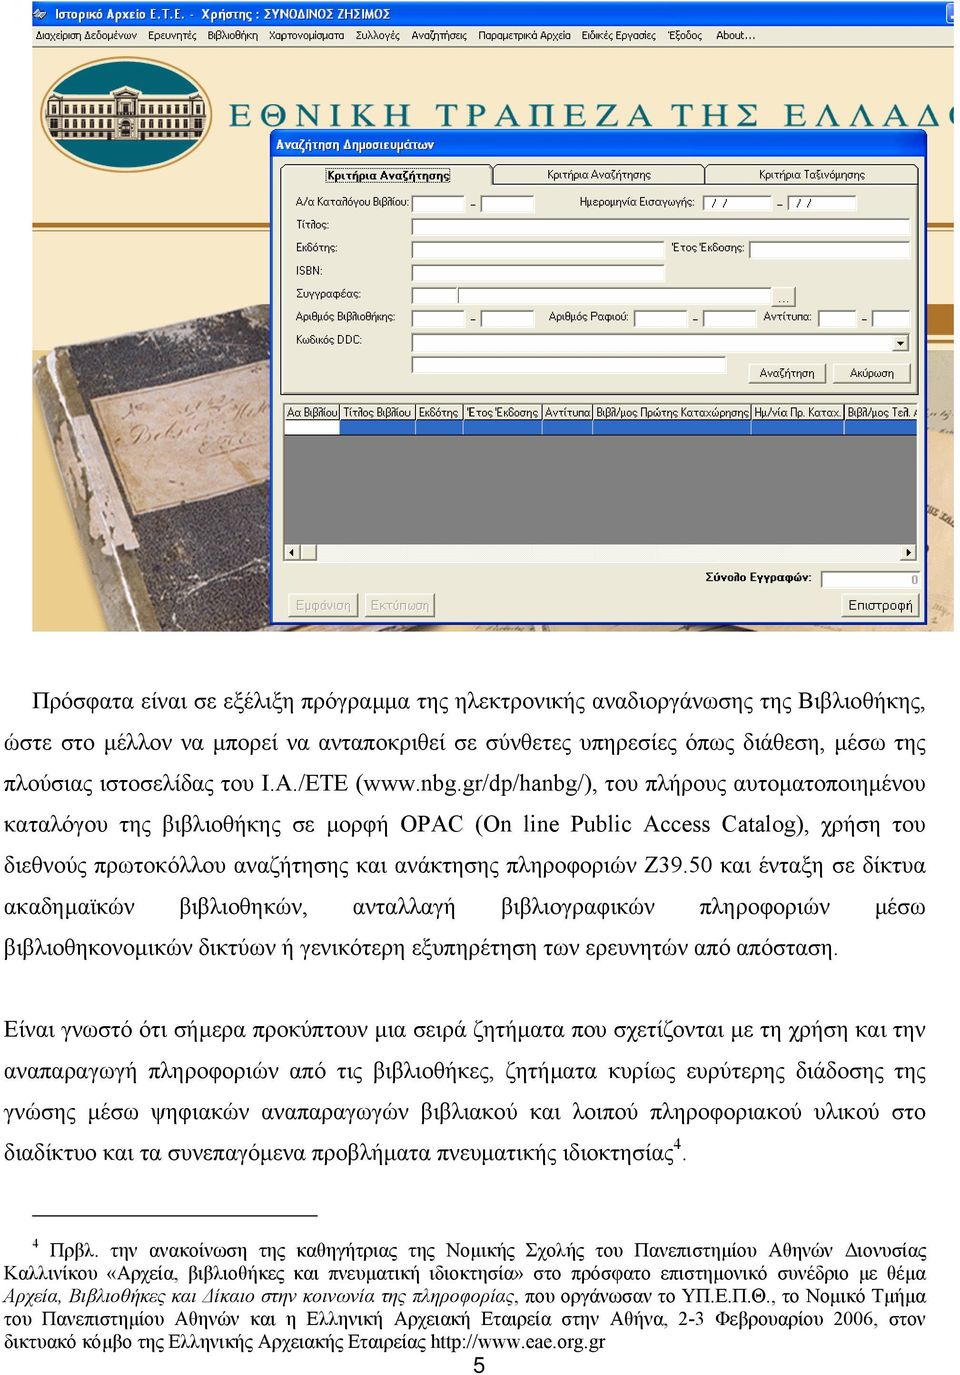 gr/dp/hanbg/), του πλήρους αυτοµατοποιηµένου καταλόγου της βιβλιοθήκης σε µορφή OPAC (On line Public Access Catalog), χρήση του διεθνούς πρωτοκόλλου αναζήτησης και ανάκτησης πληροφοριών Ζ39.